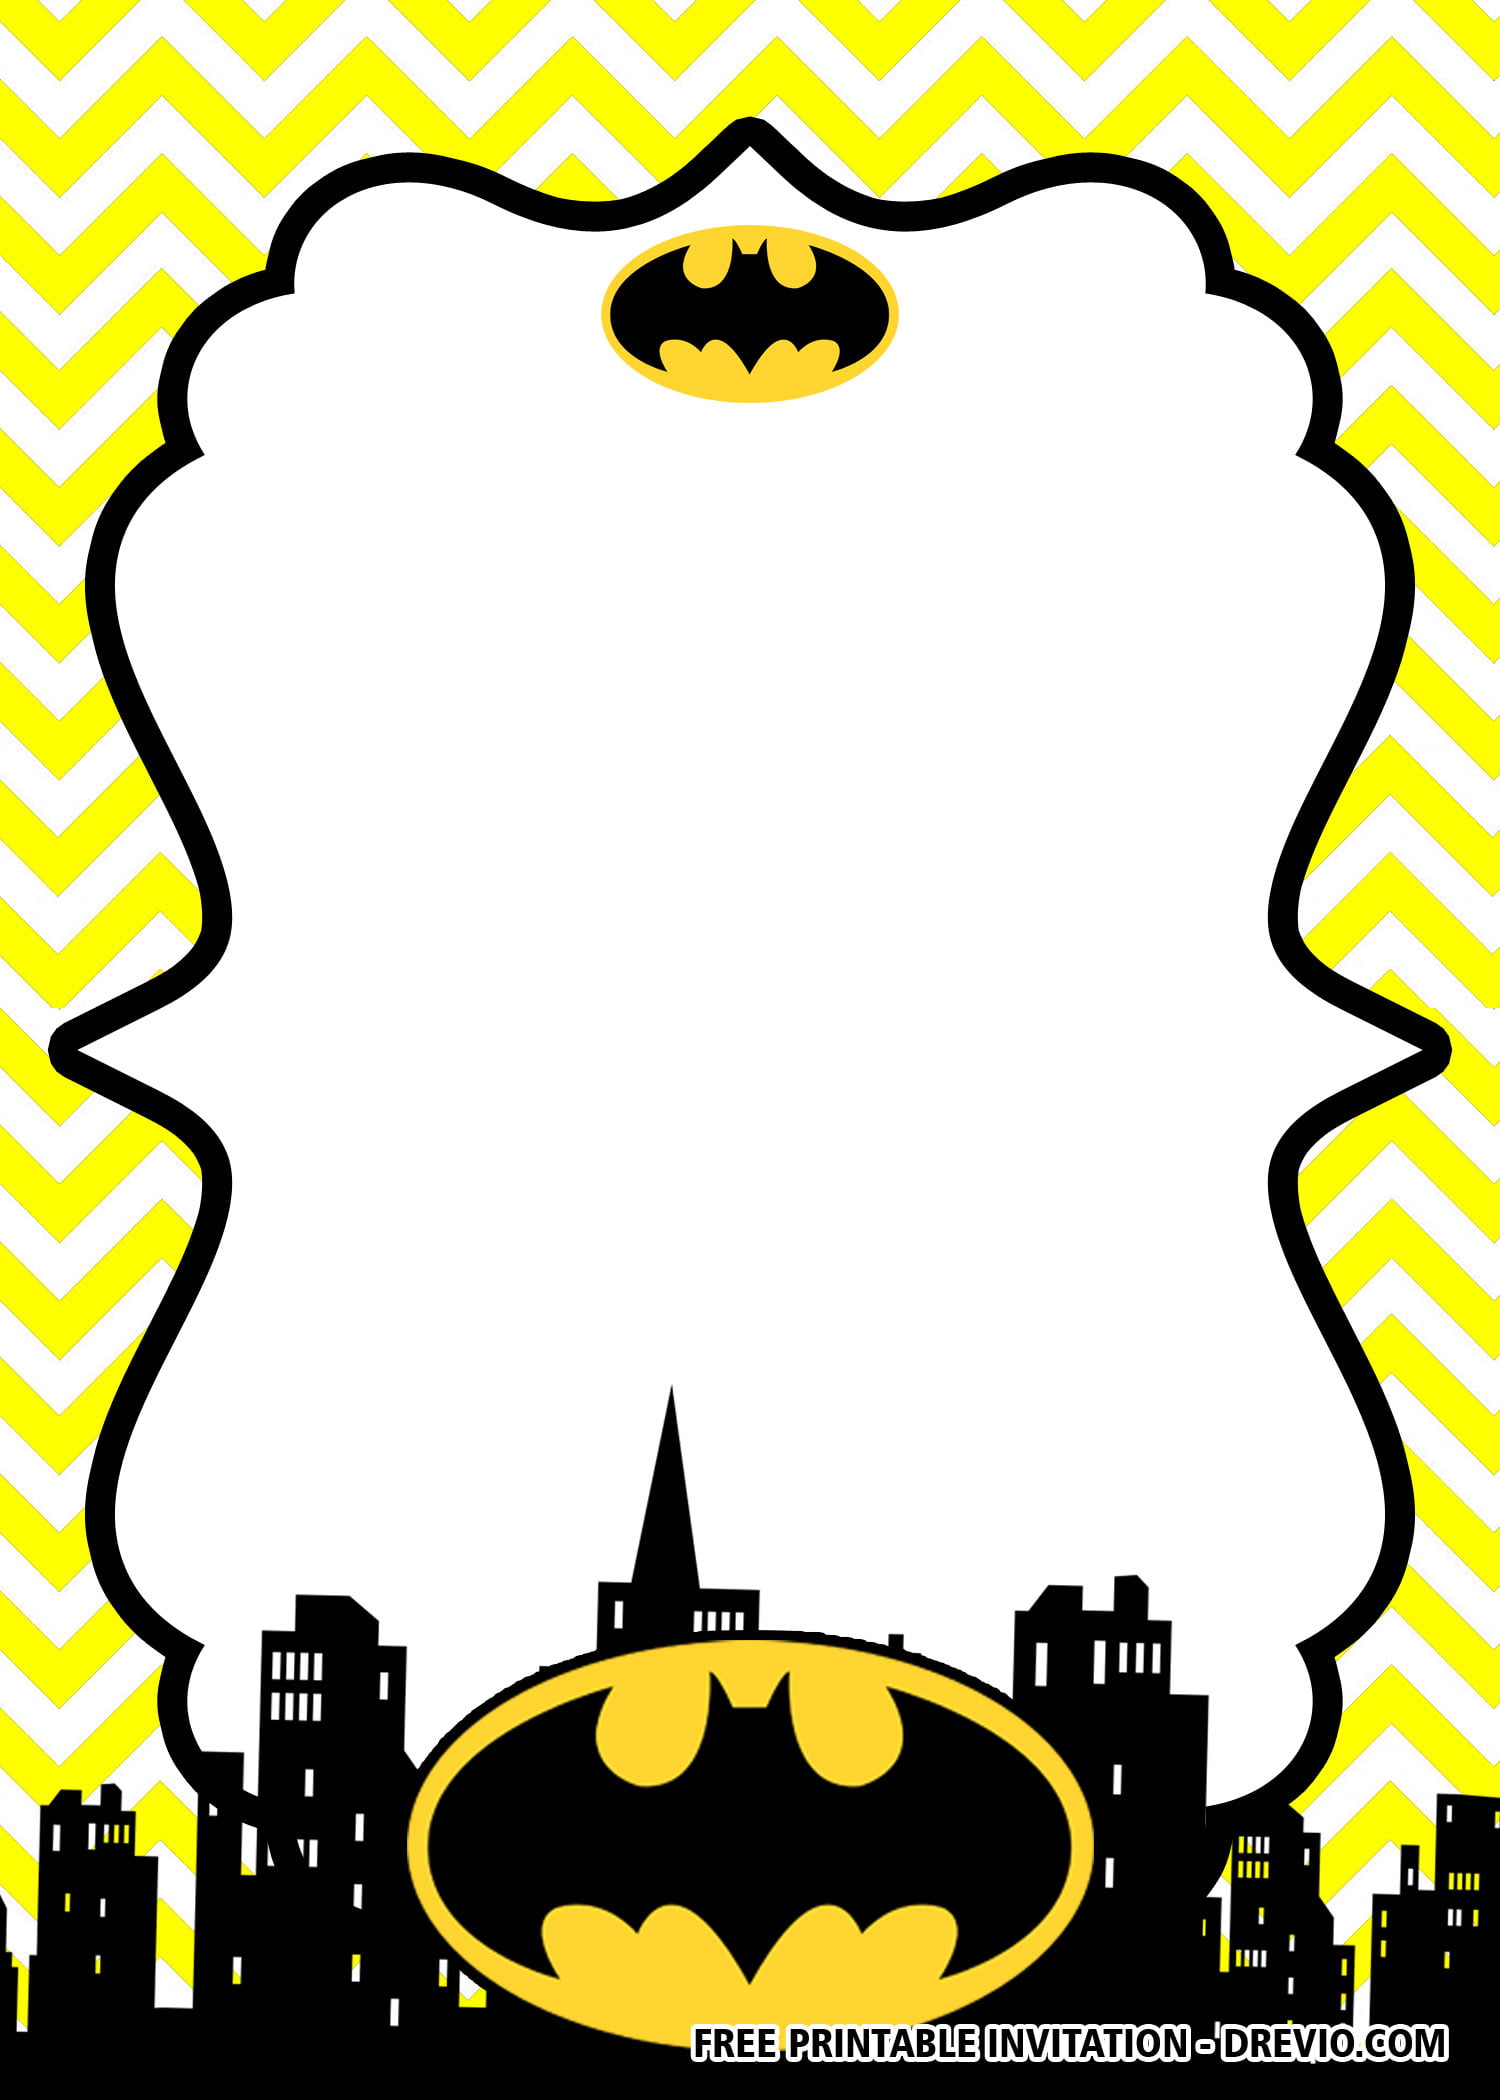 FREE Printable Batman Birthday Invitation Templates Download Hundreds 